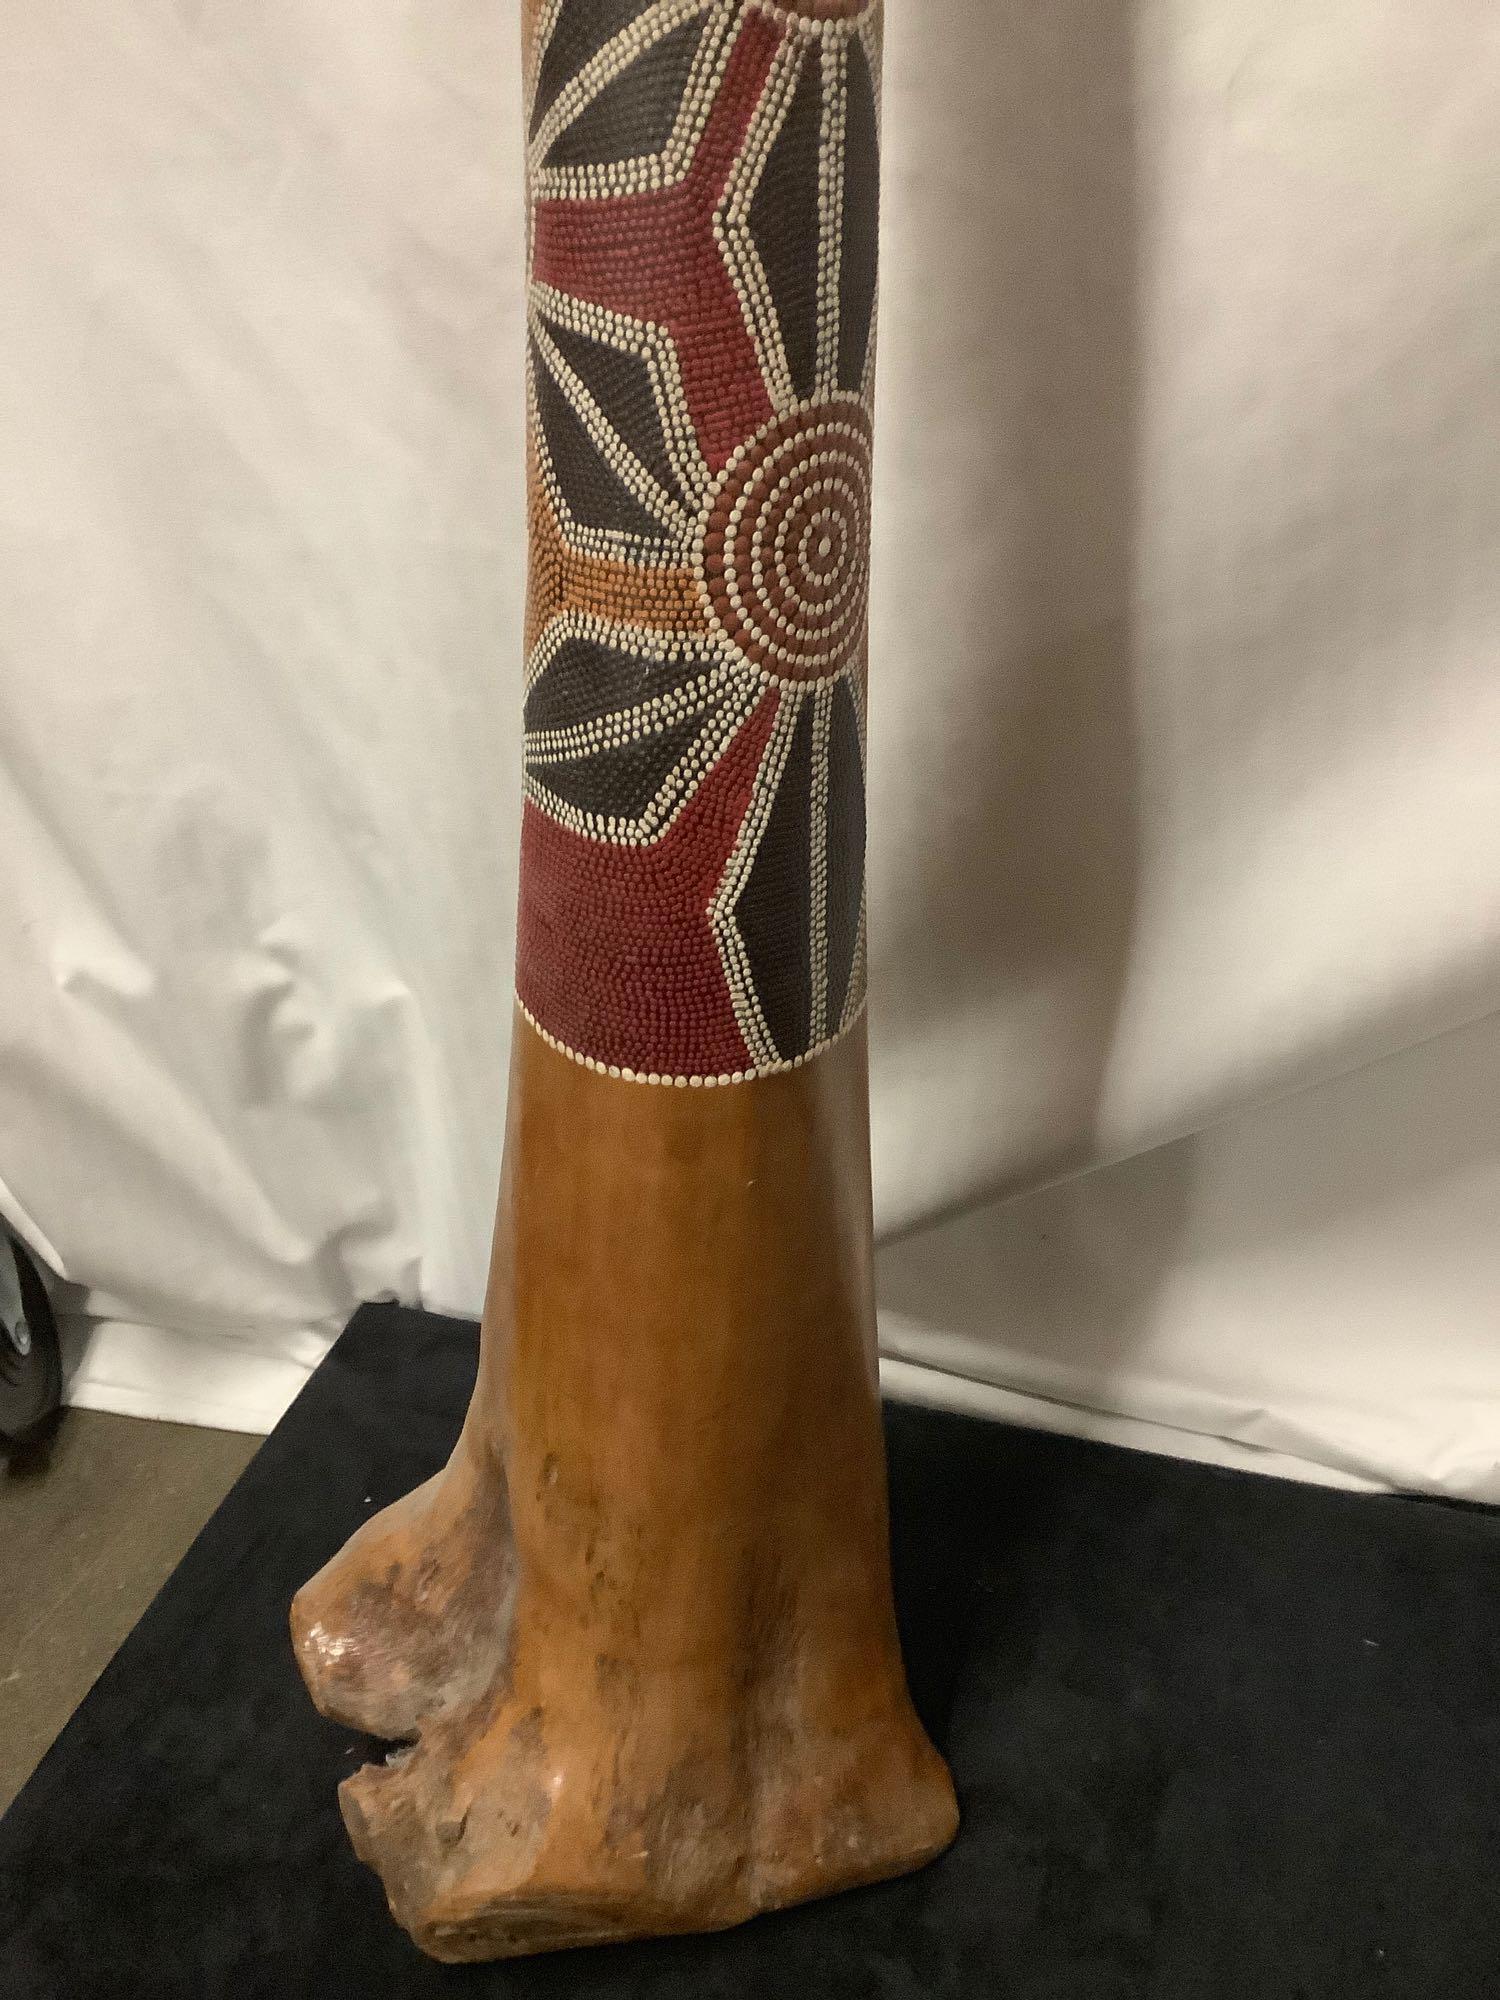 Large custom made hand painted wooden Didgeridoo, indigenous Australian instrument